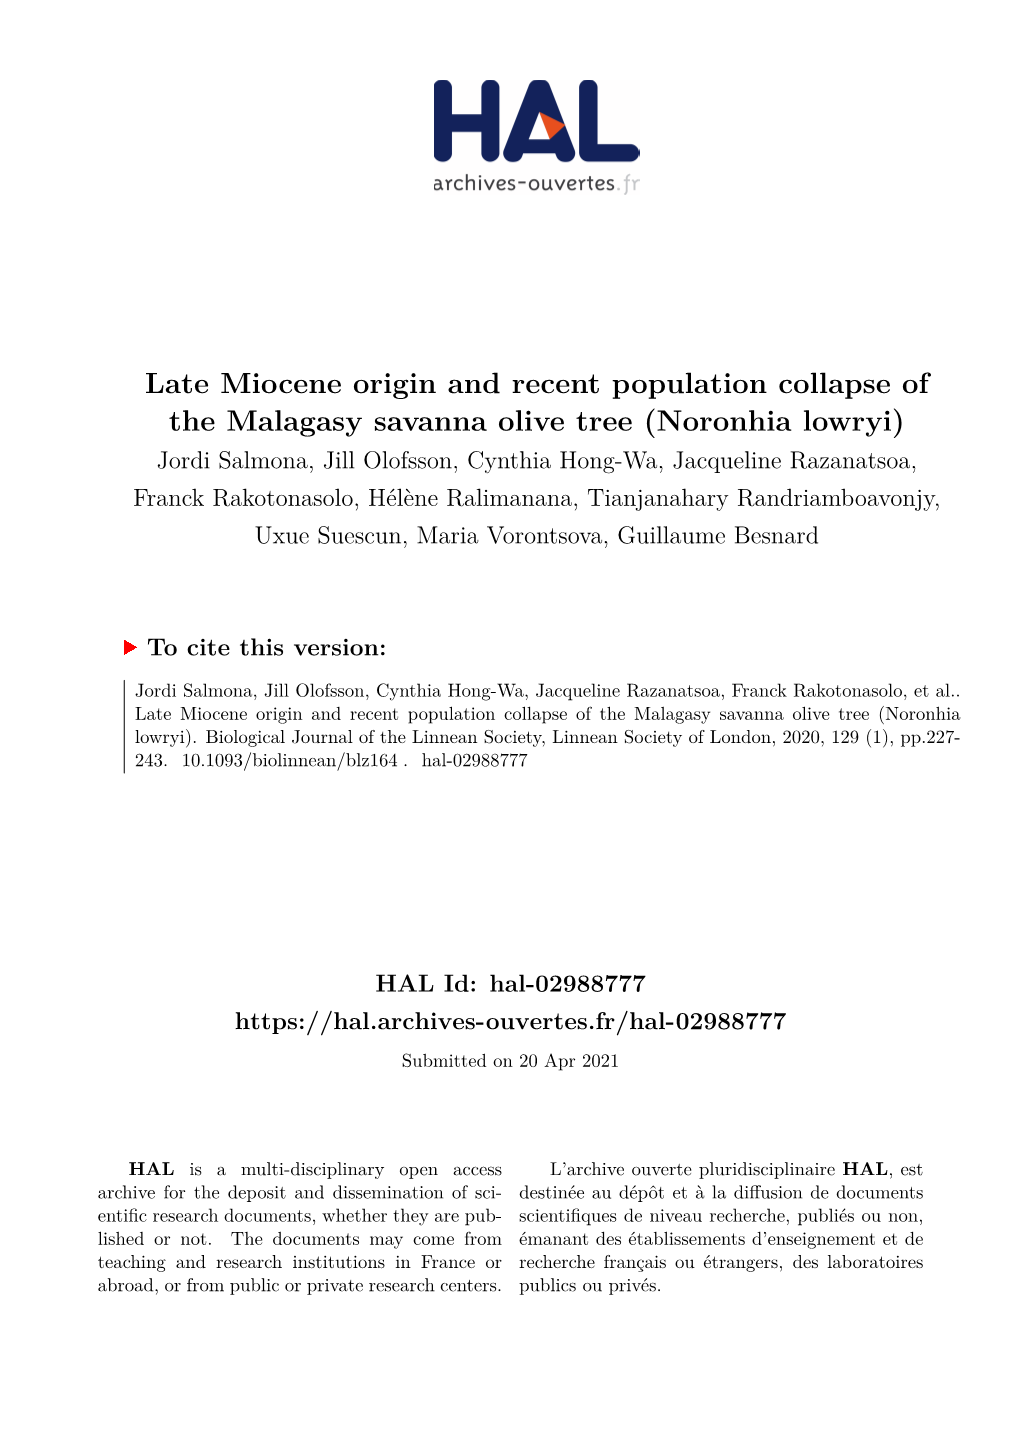 Late Miocene Origin and Recent Population